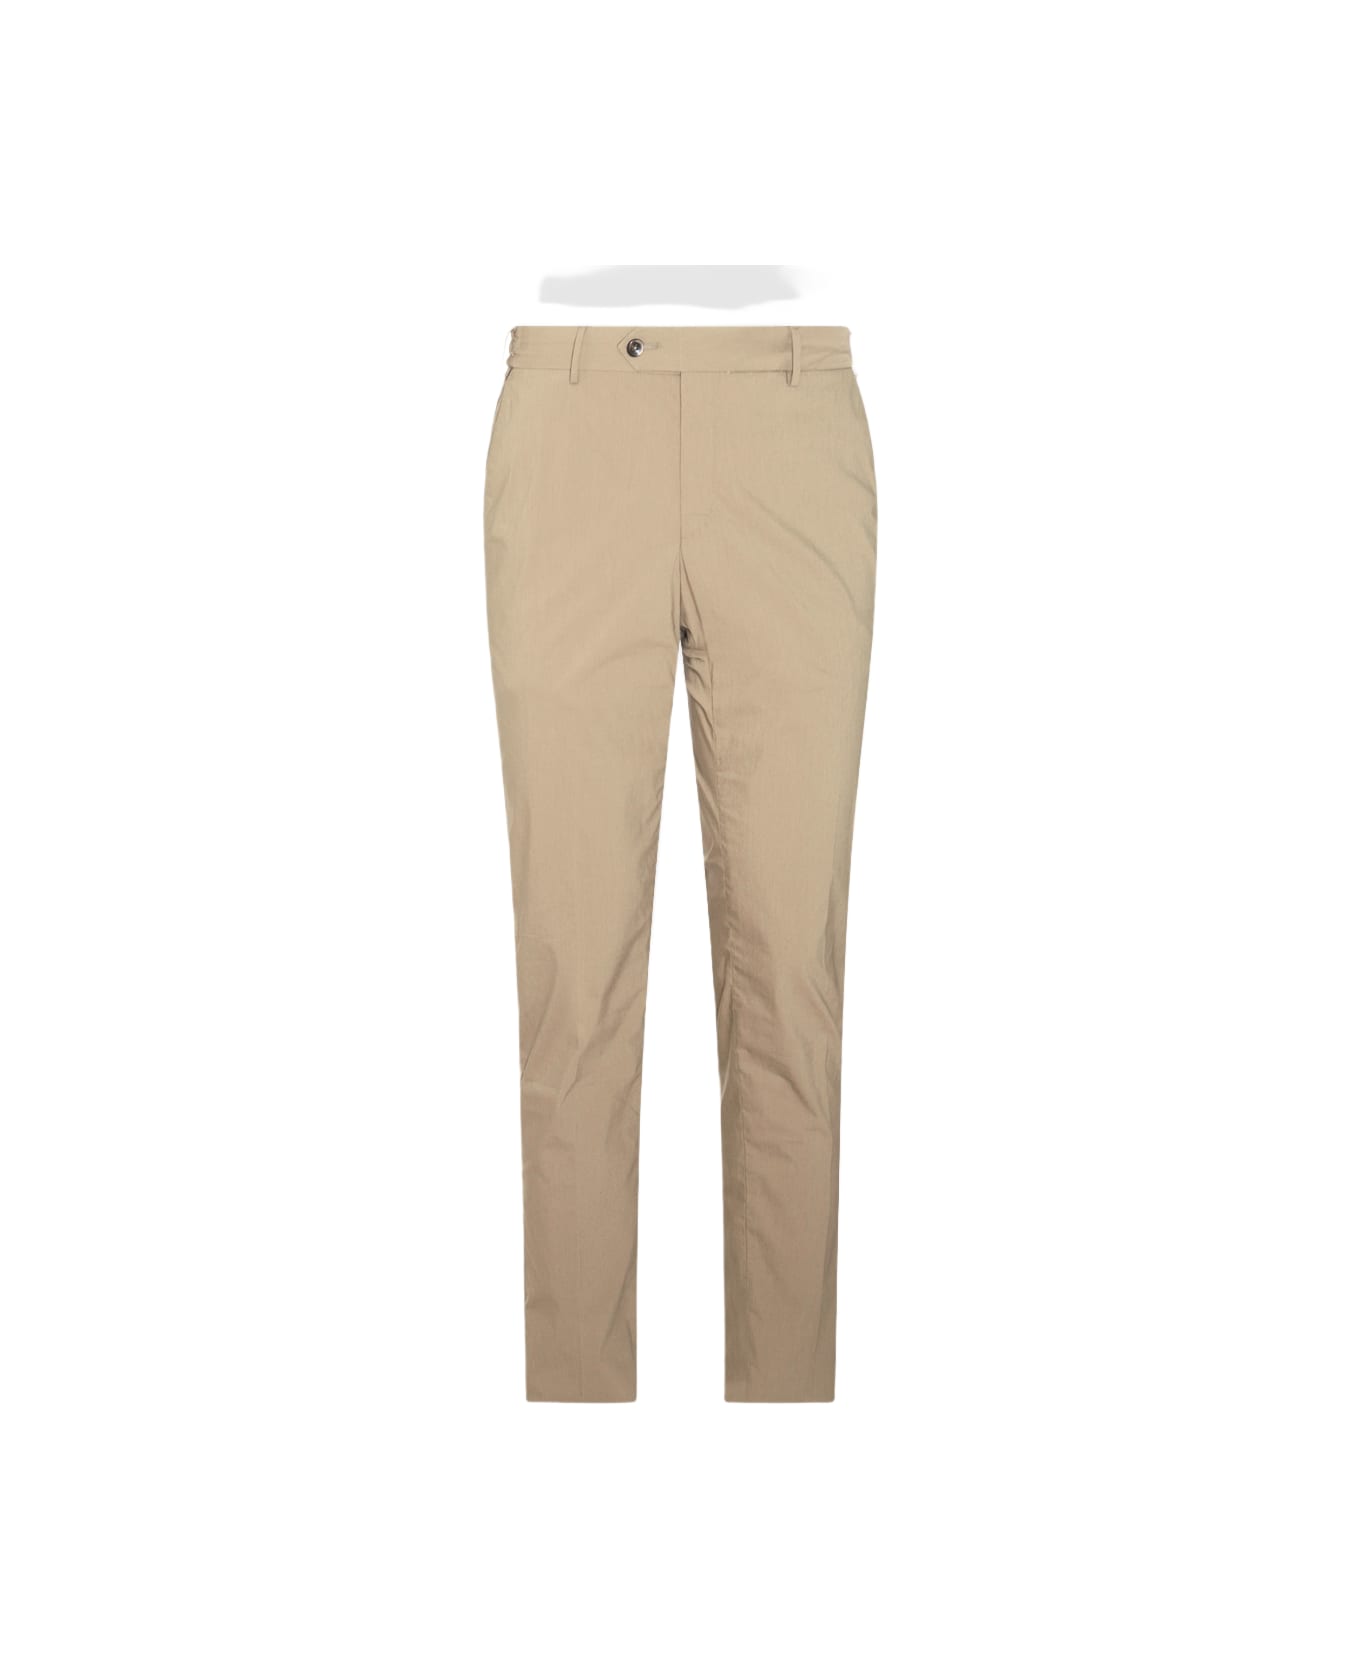 PT01 Beige Cotton Pants - BEIGE FREDDO